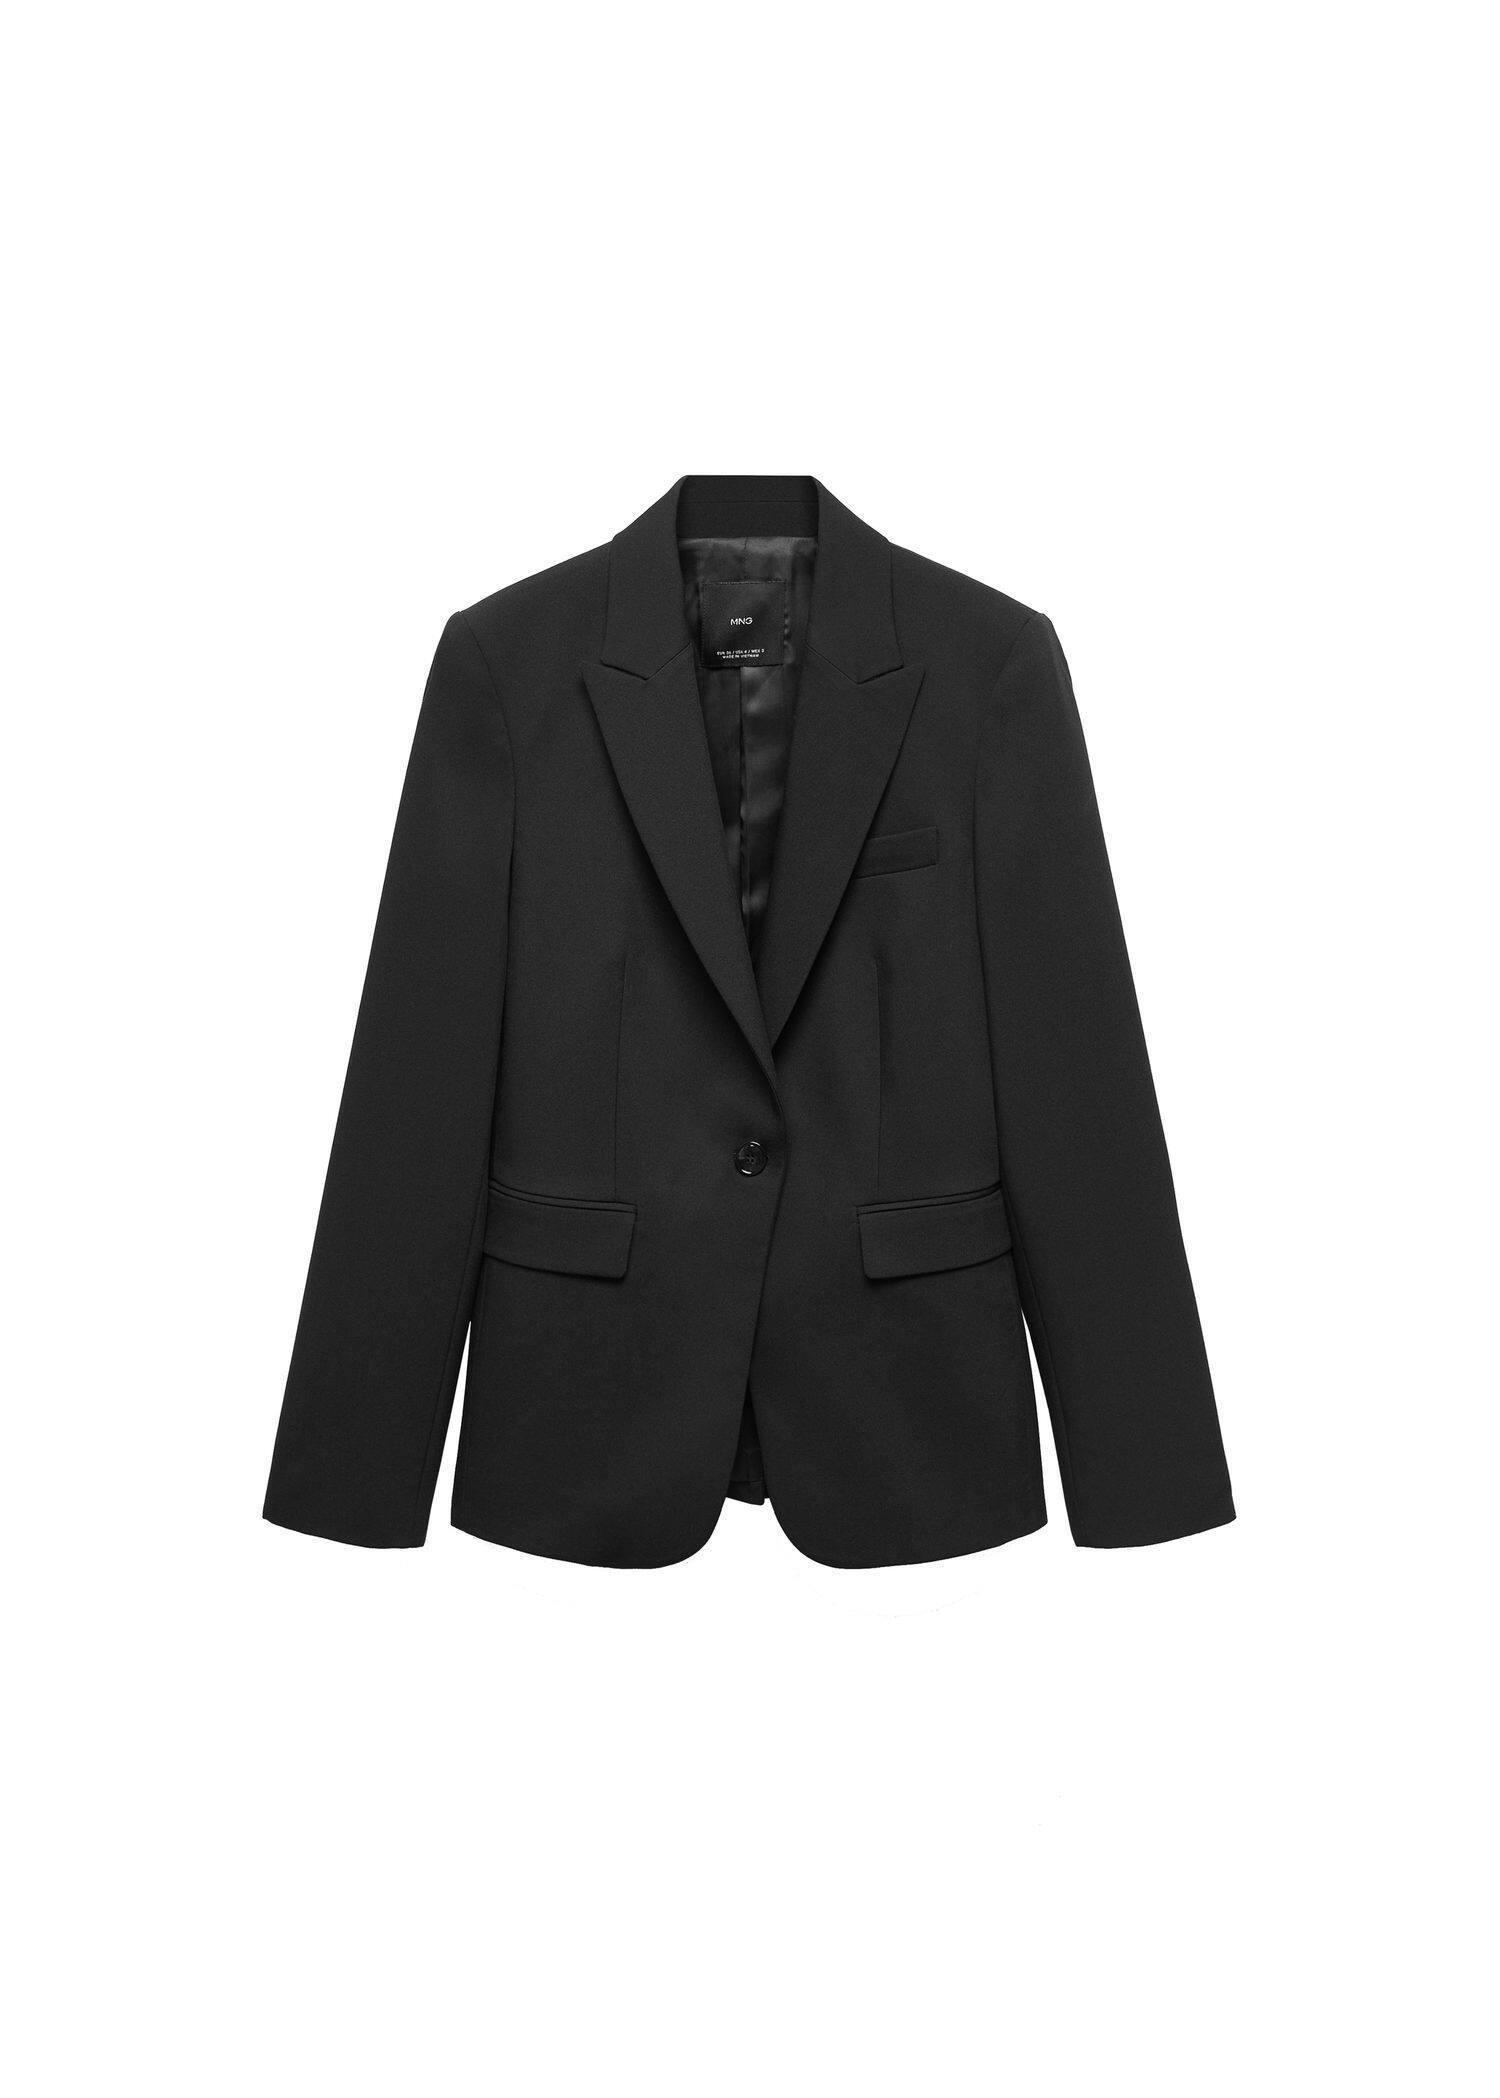 Mango - Black Fitted Suit Jacket